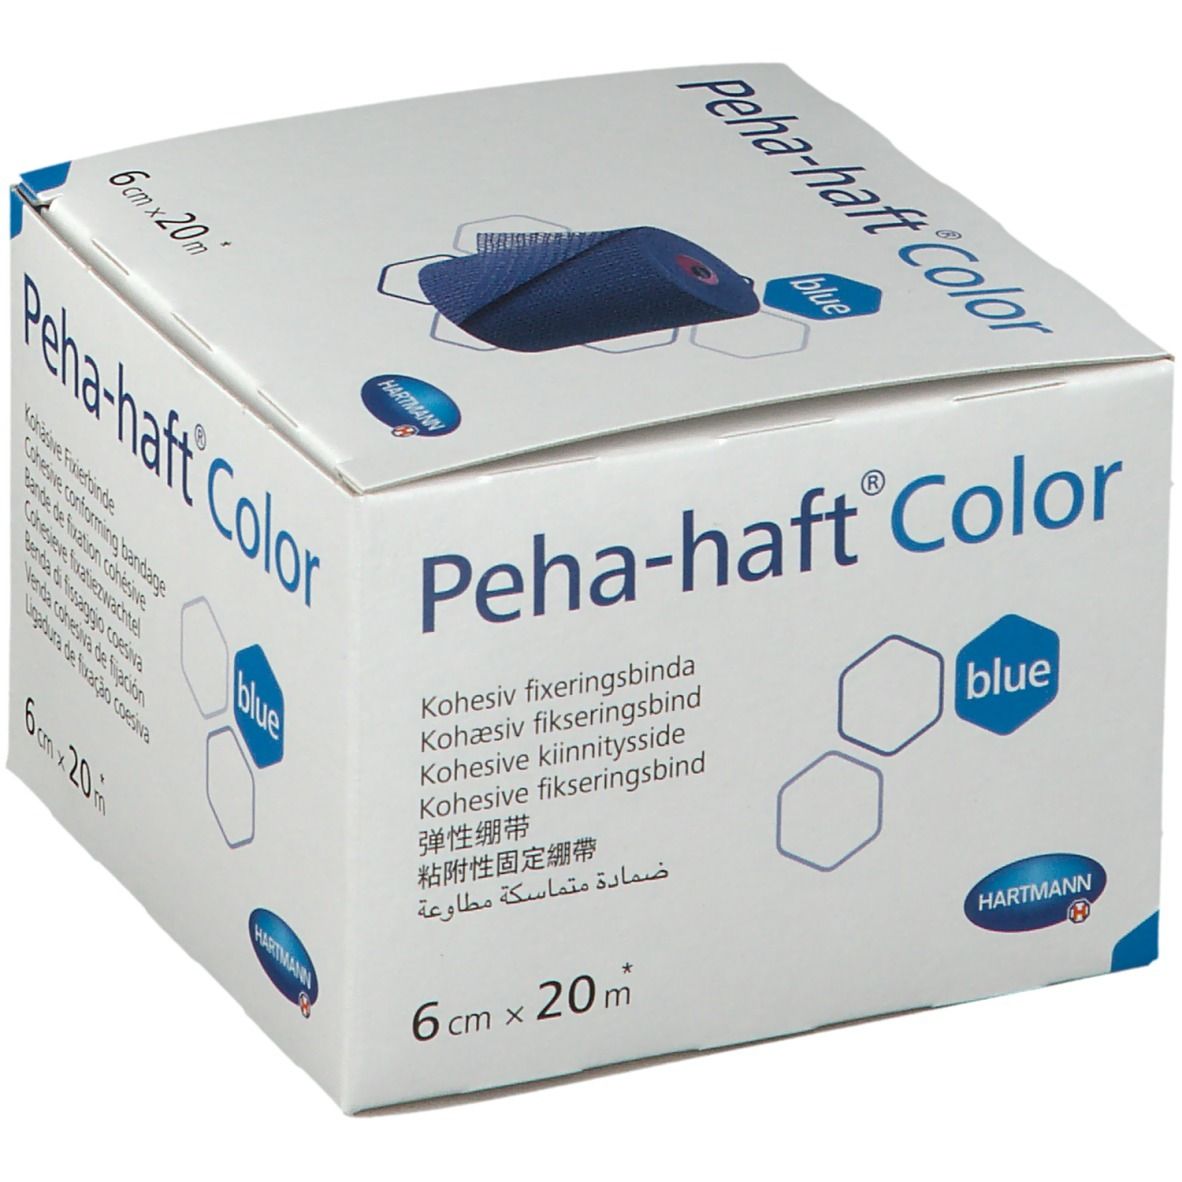 Peha-haft® Color latexfrei Fixierbinde blau 6 cm x 20 m blau